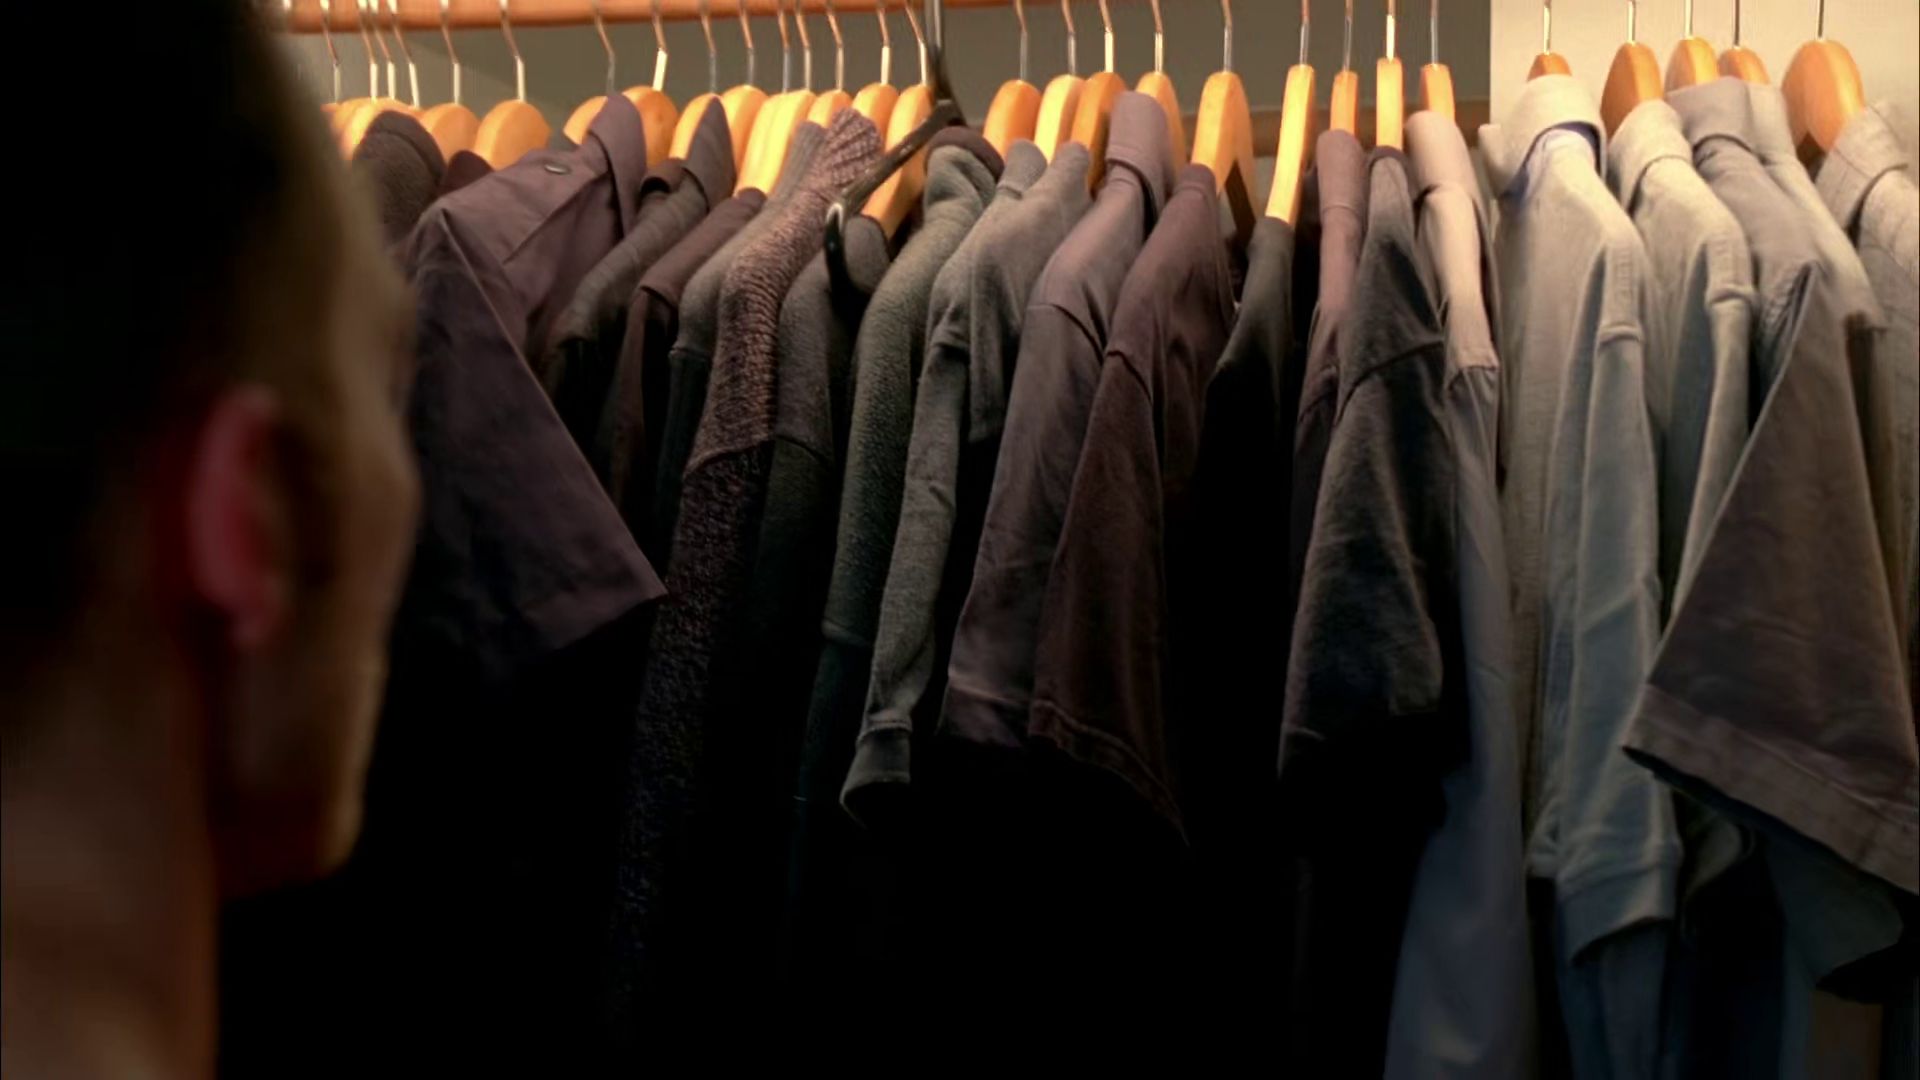 Item of interest: Nick Lane's wardrobe